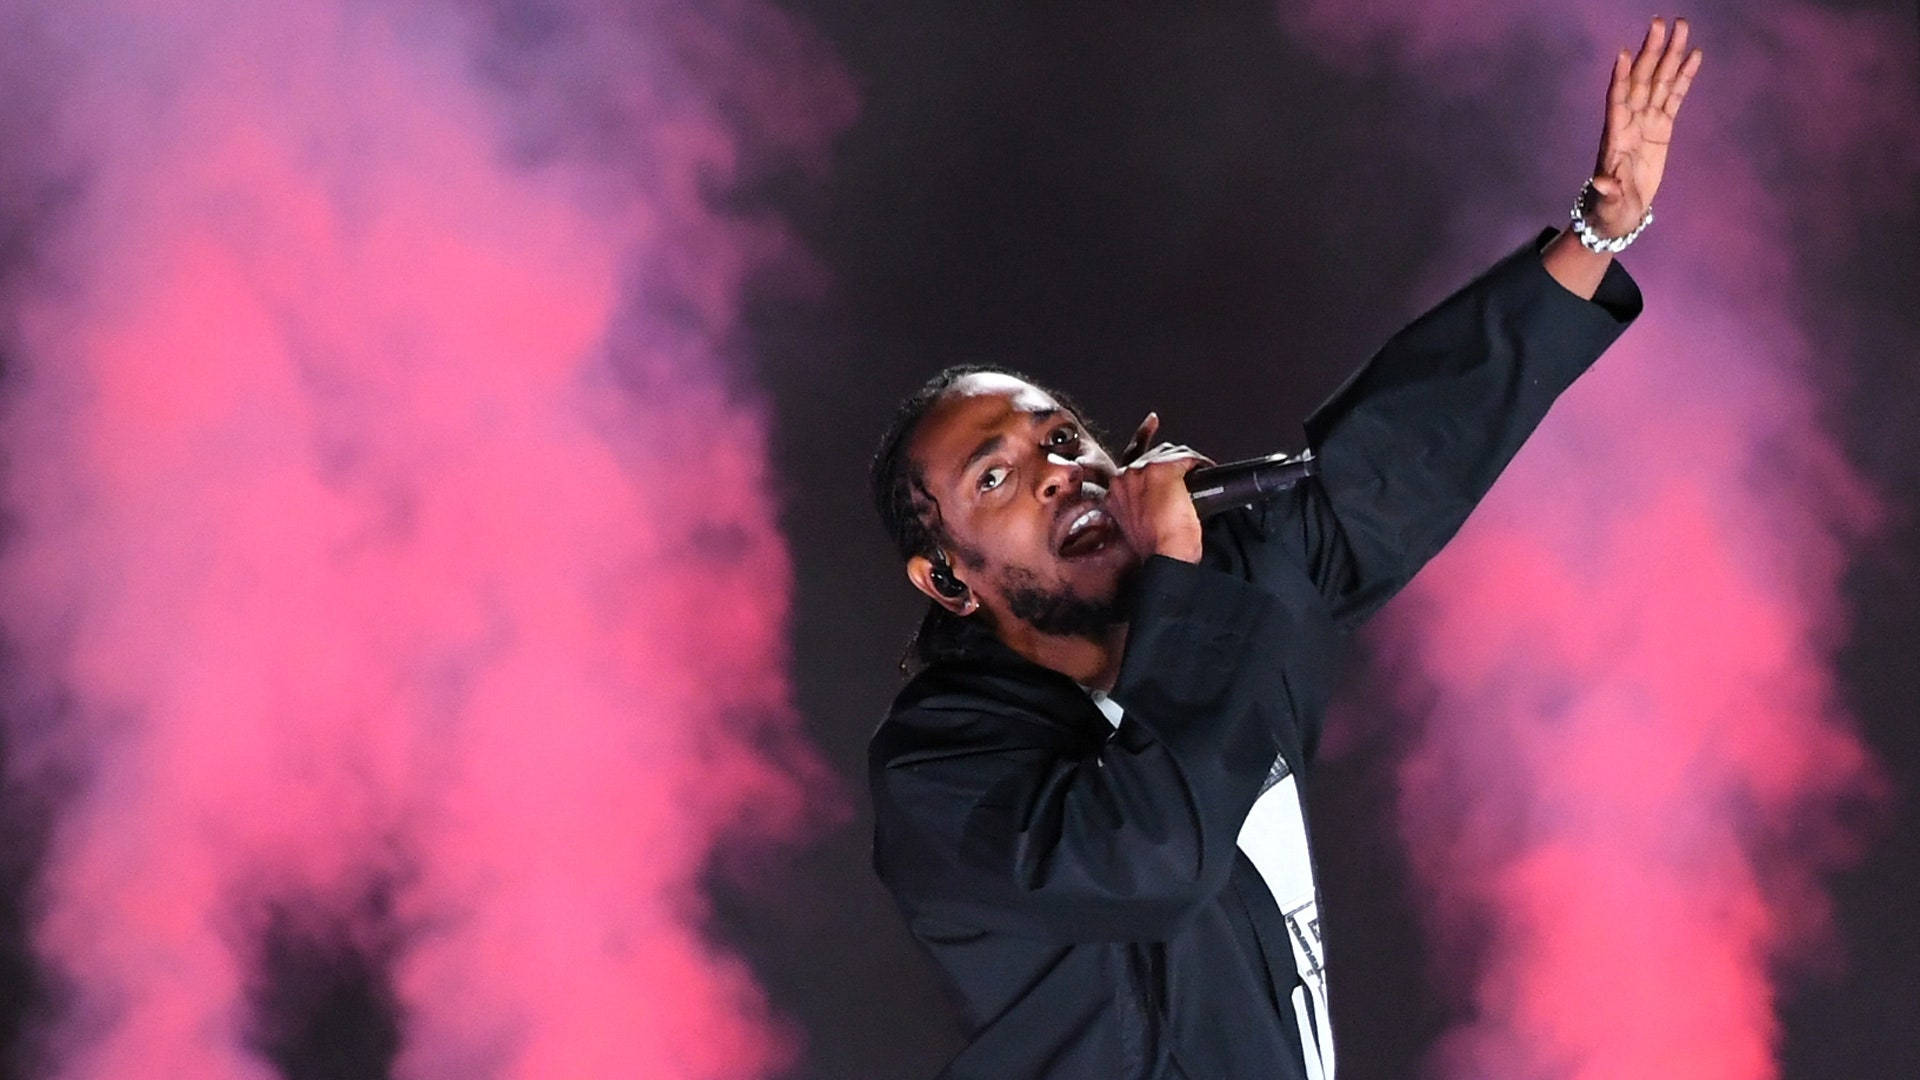 Kendrick Lamar Against Pink Smoke Background